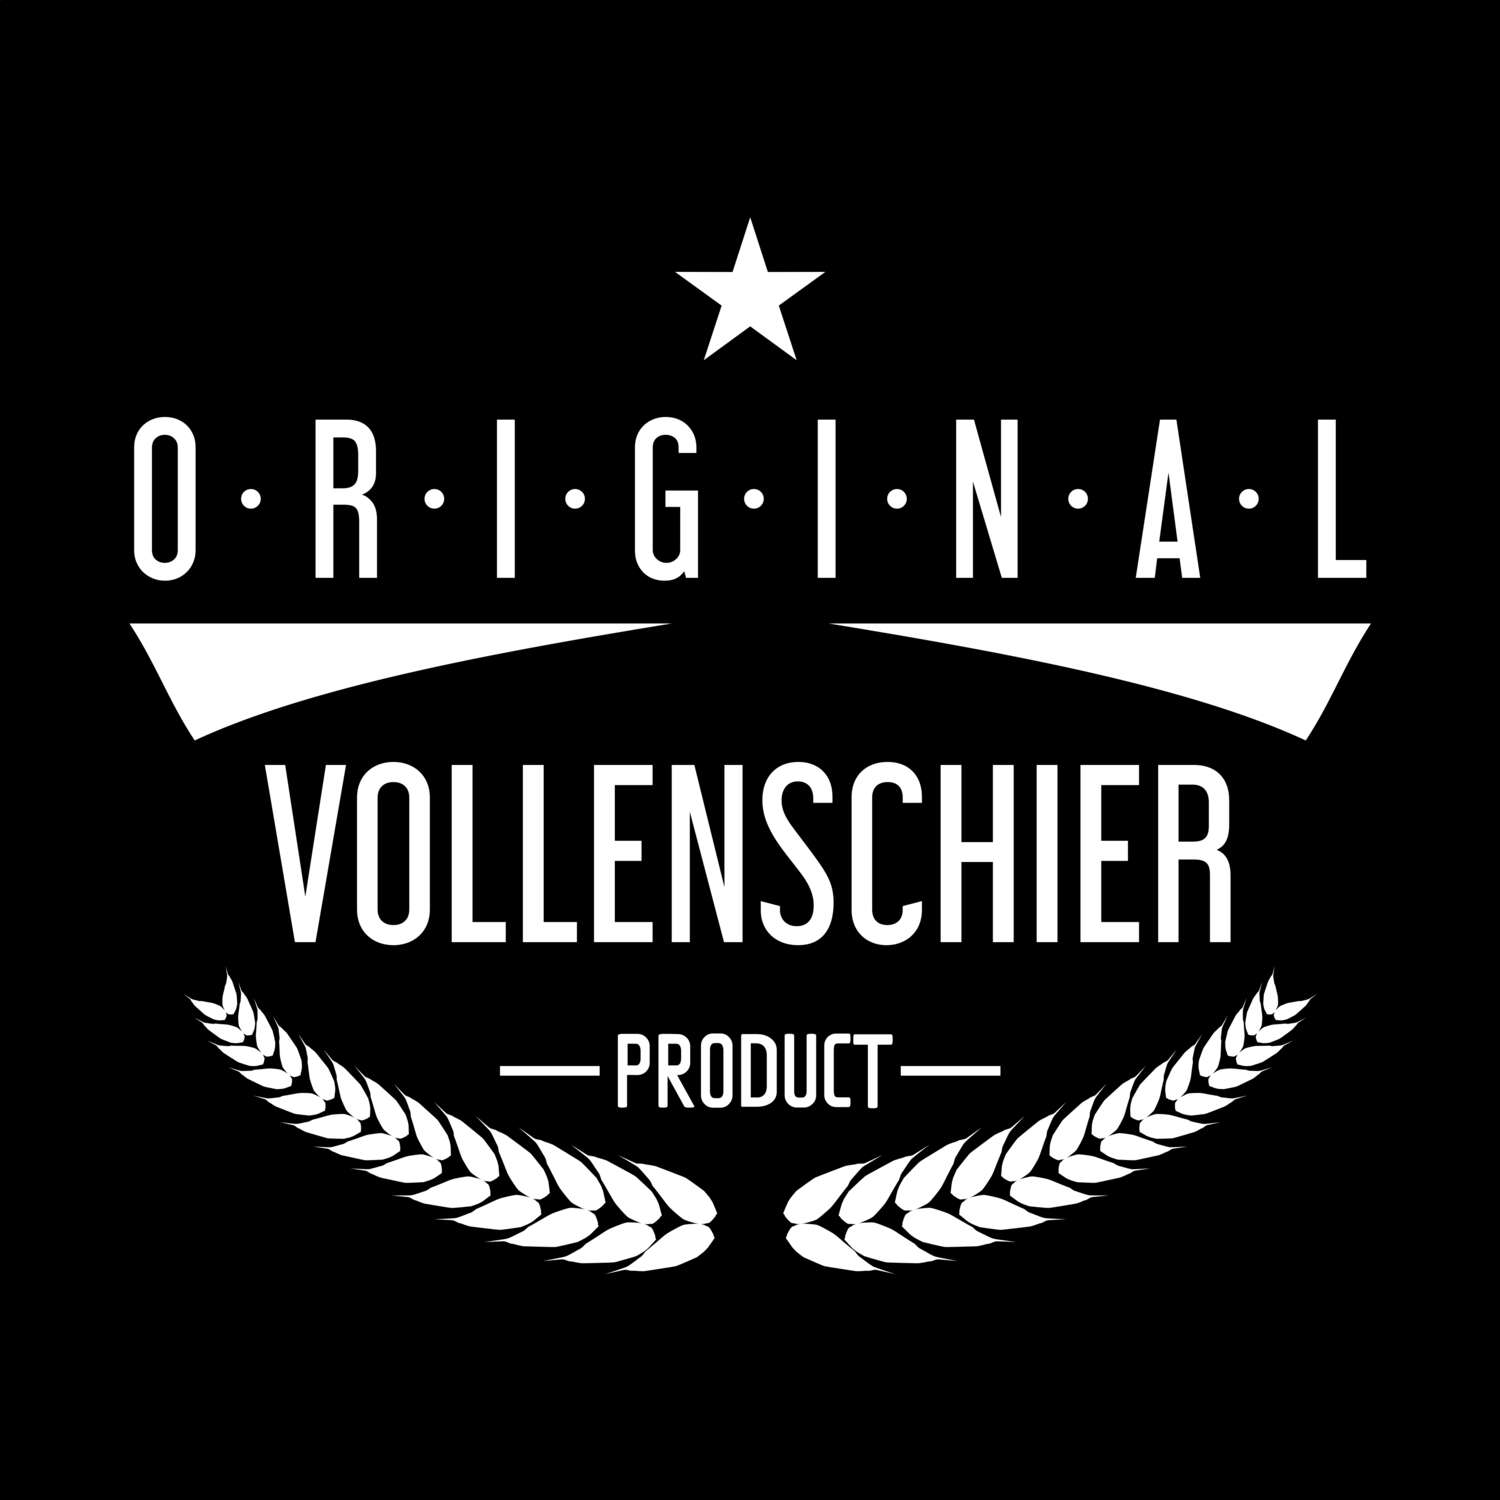 Vollenschier T-Shirt »Original Product«